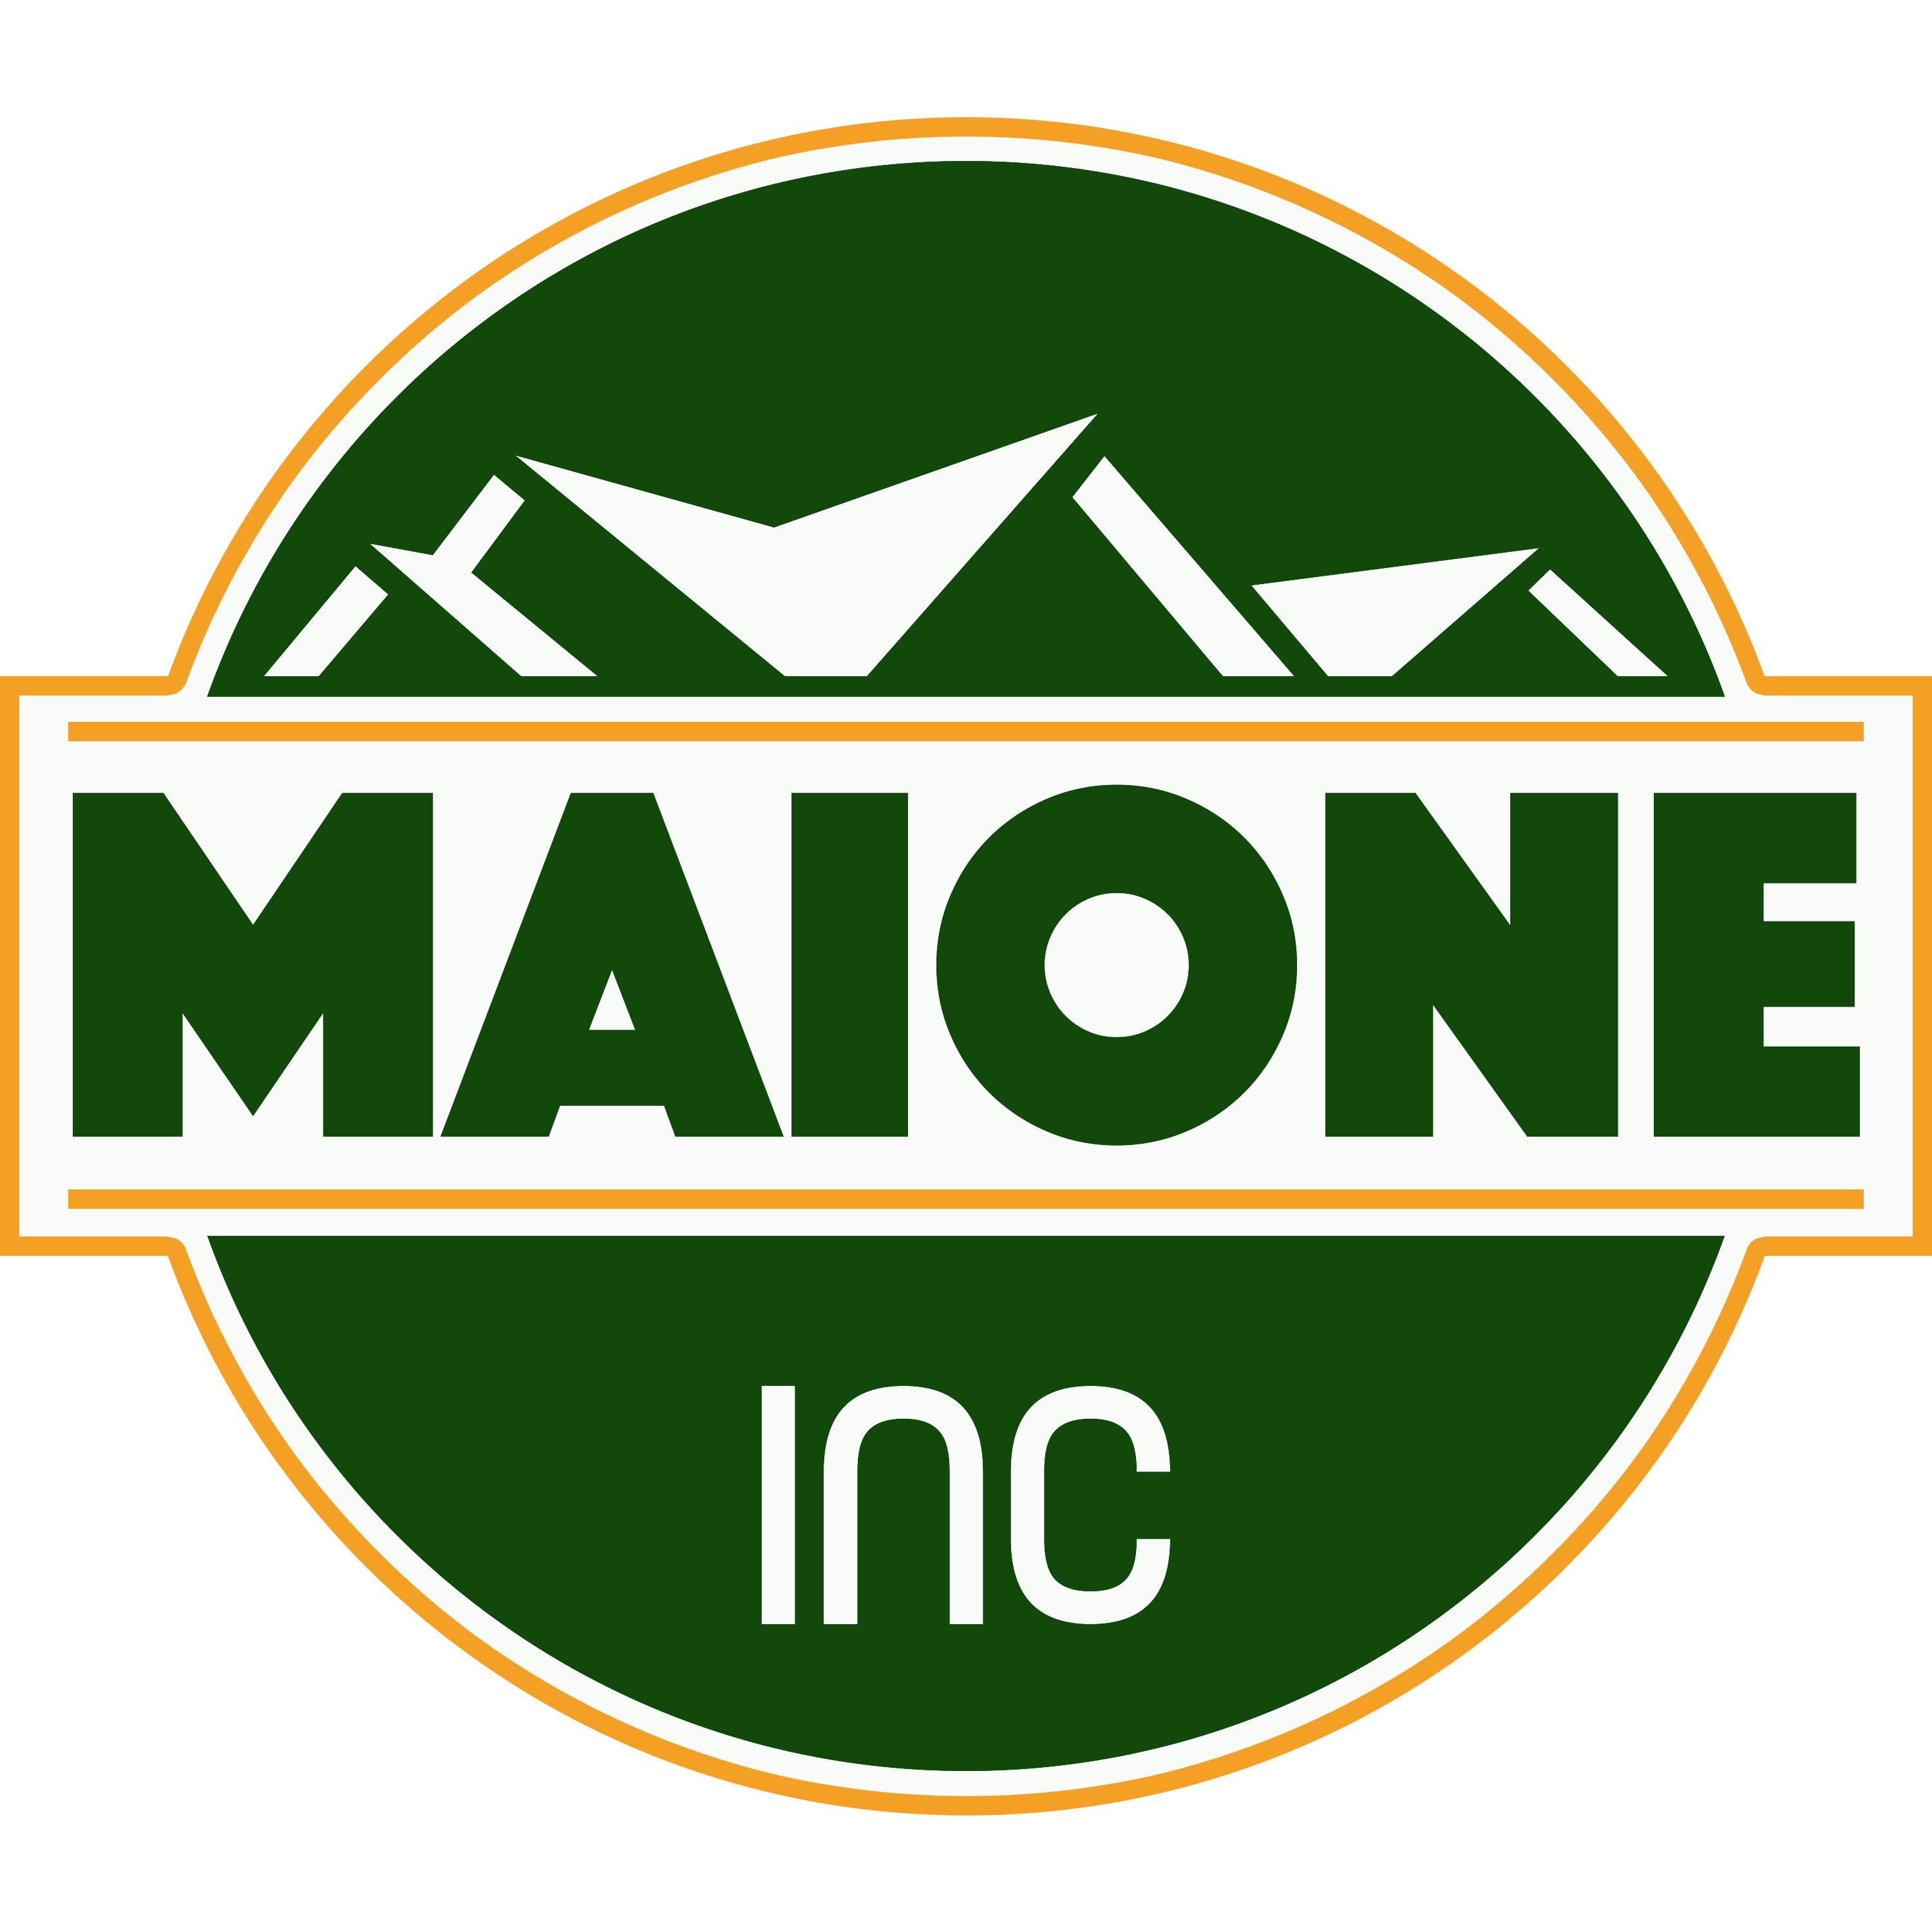 Maione Inc.